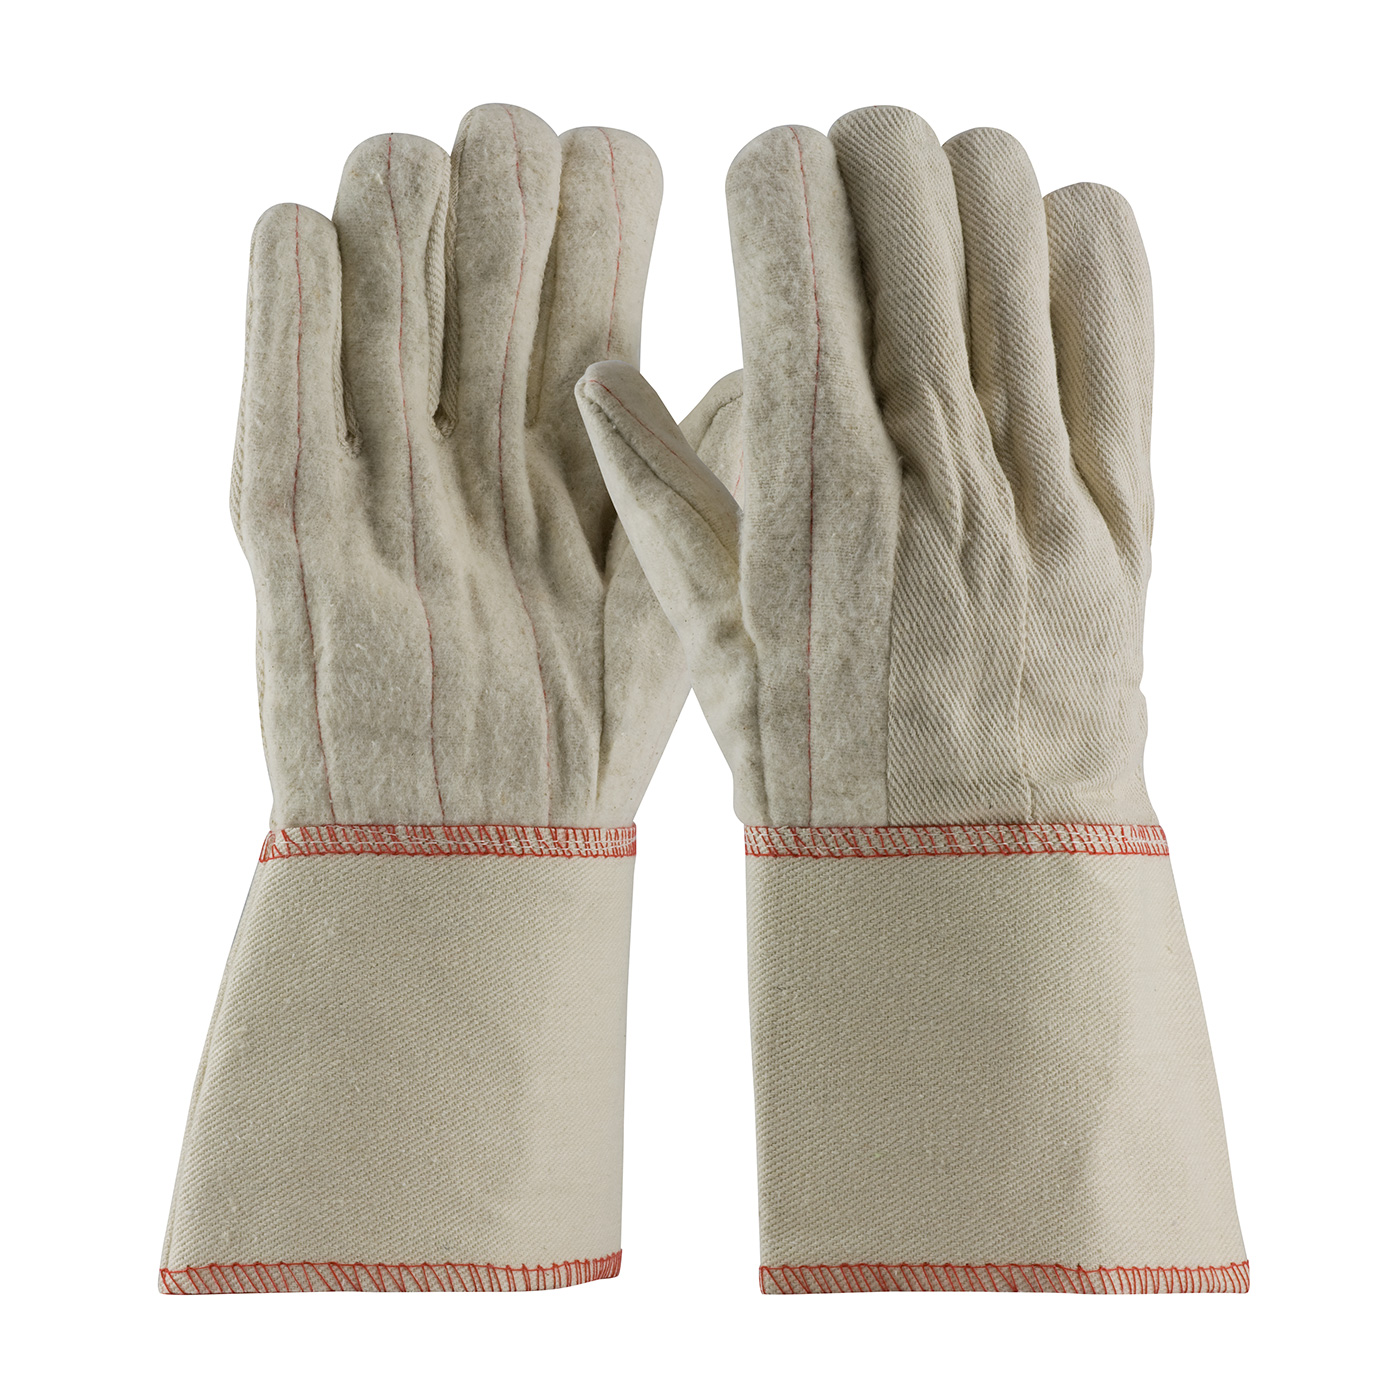 PIP Men's Natural 18oz. Nap-out Finish Double Palm Cotton Canvas Gloves - Gauntlet Cuff